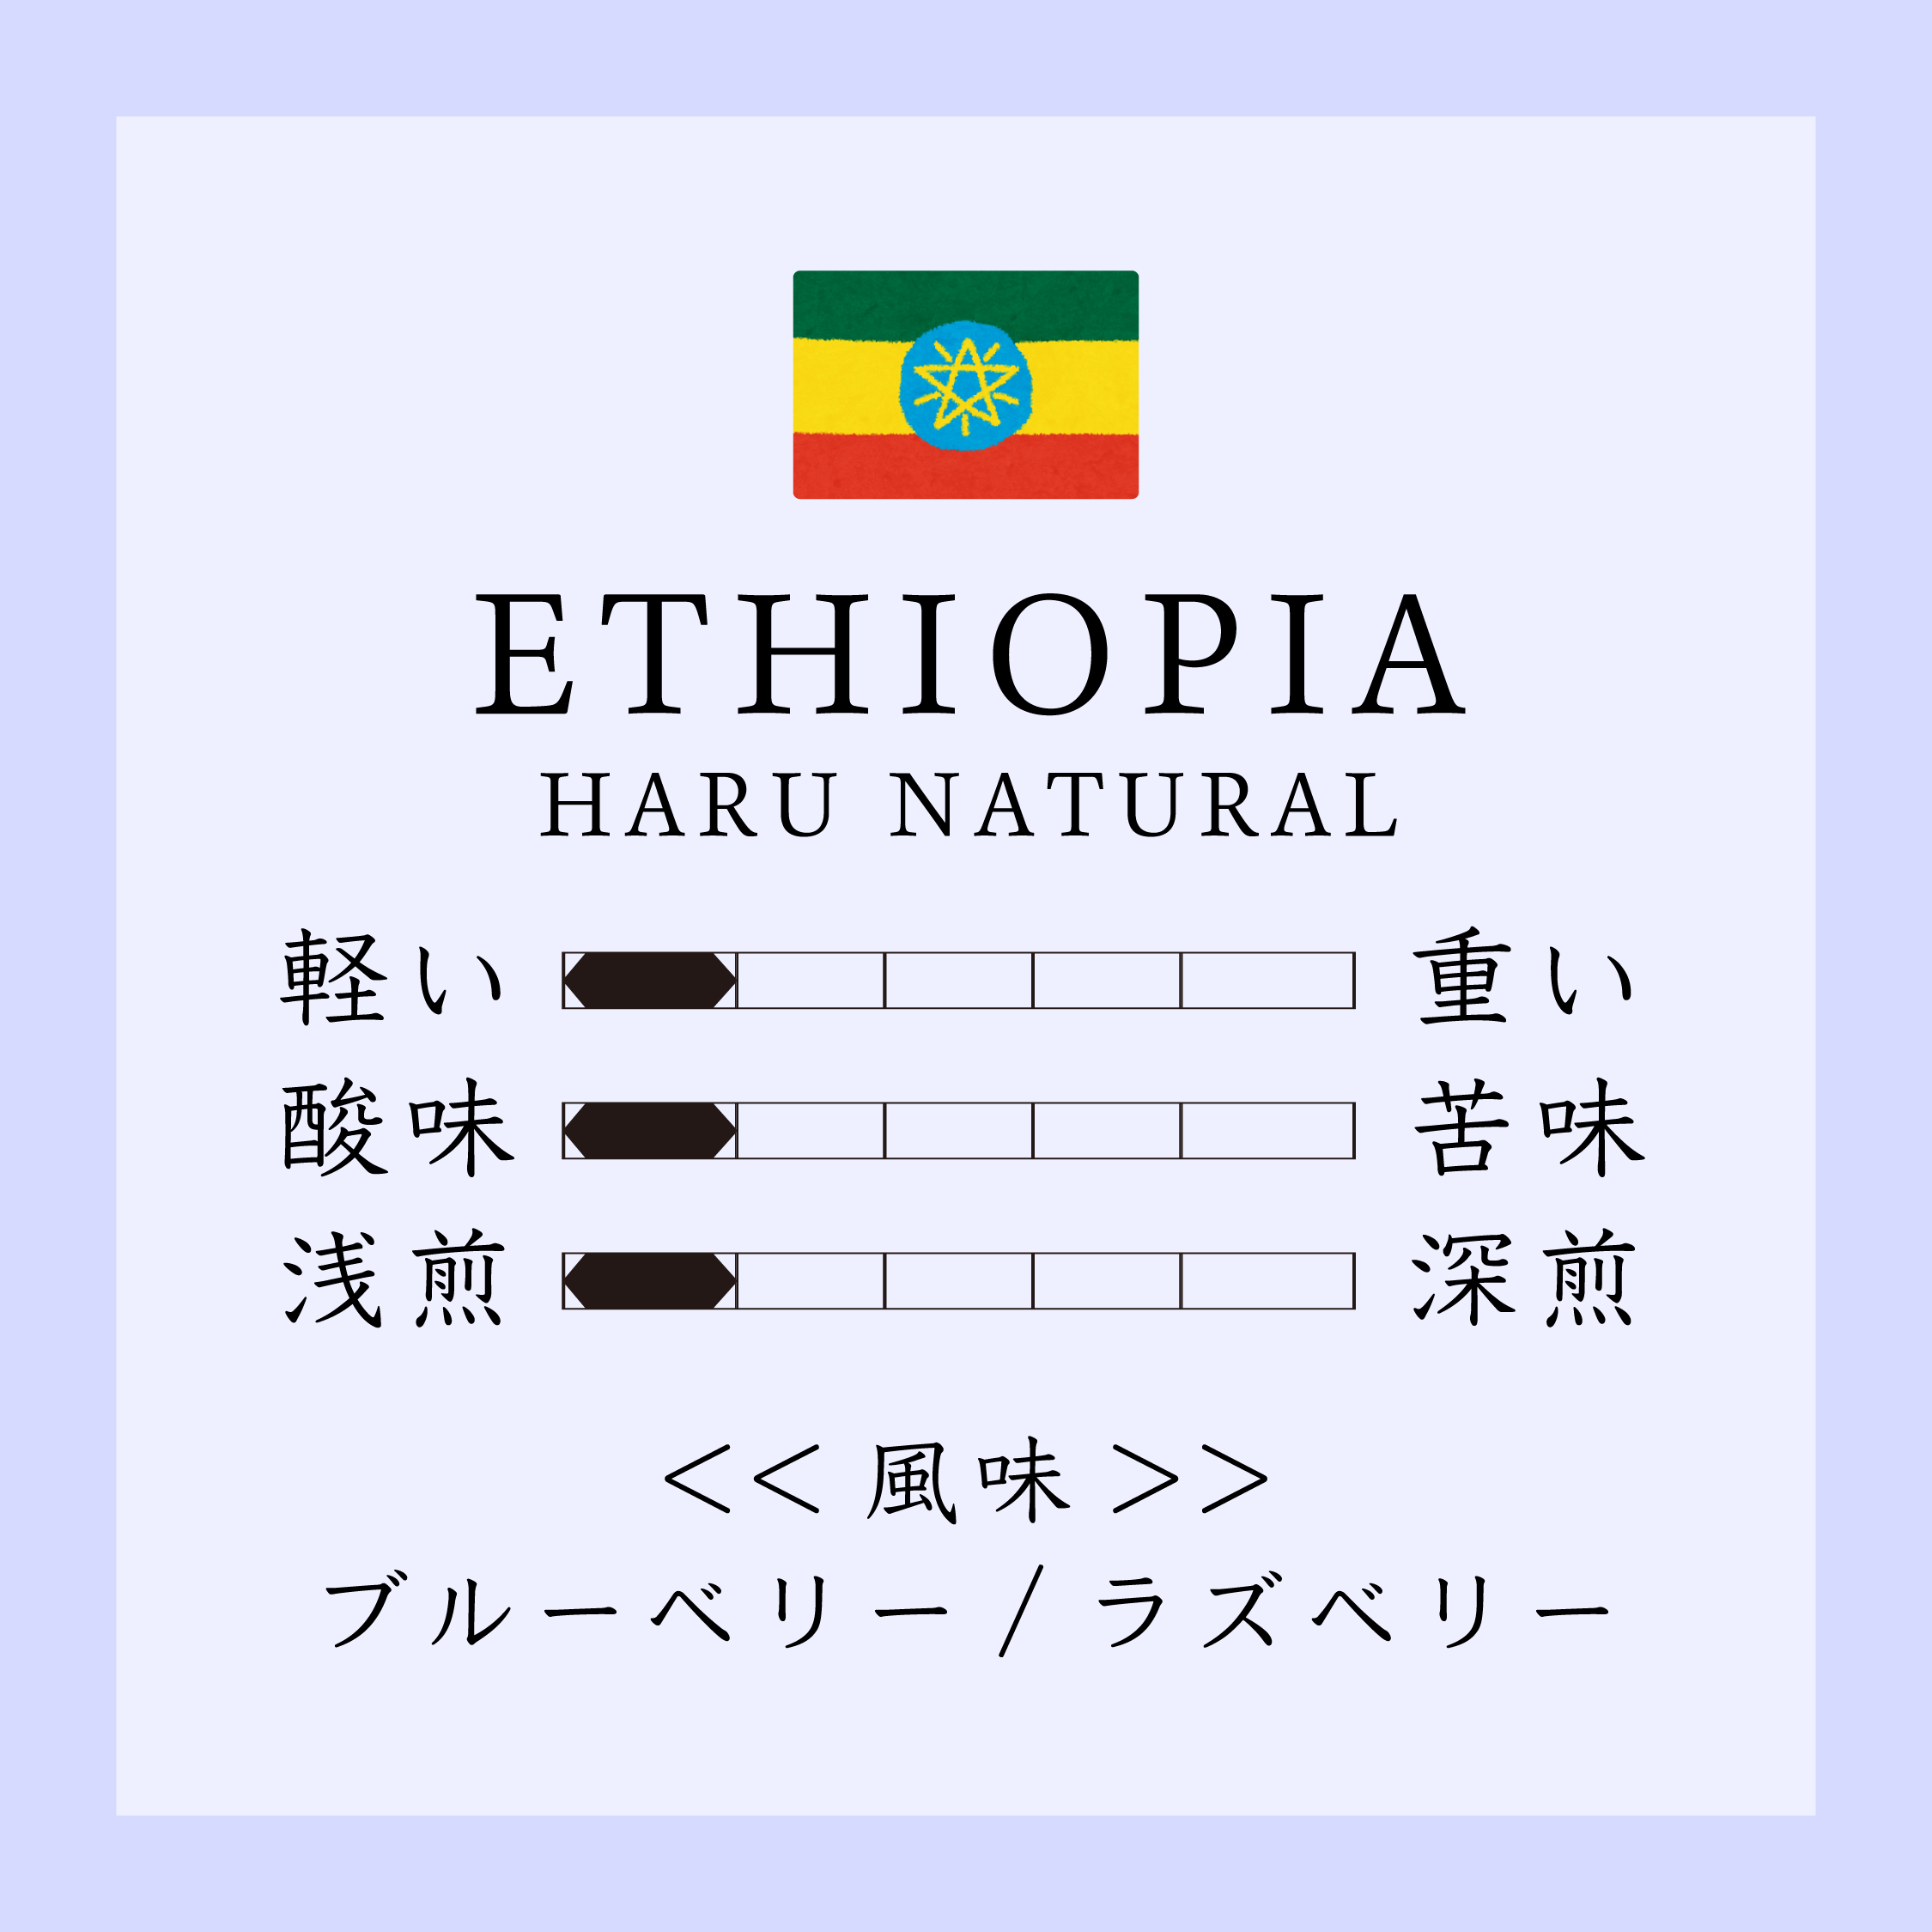 Ethiopia Haru Natural 150g